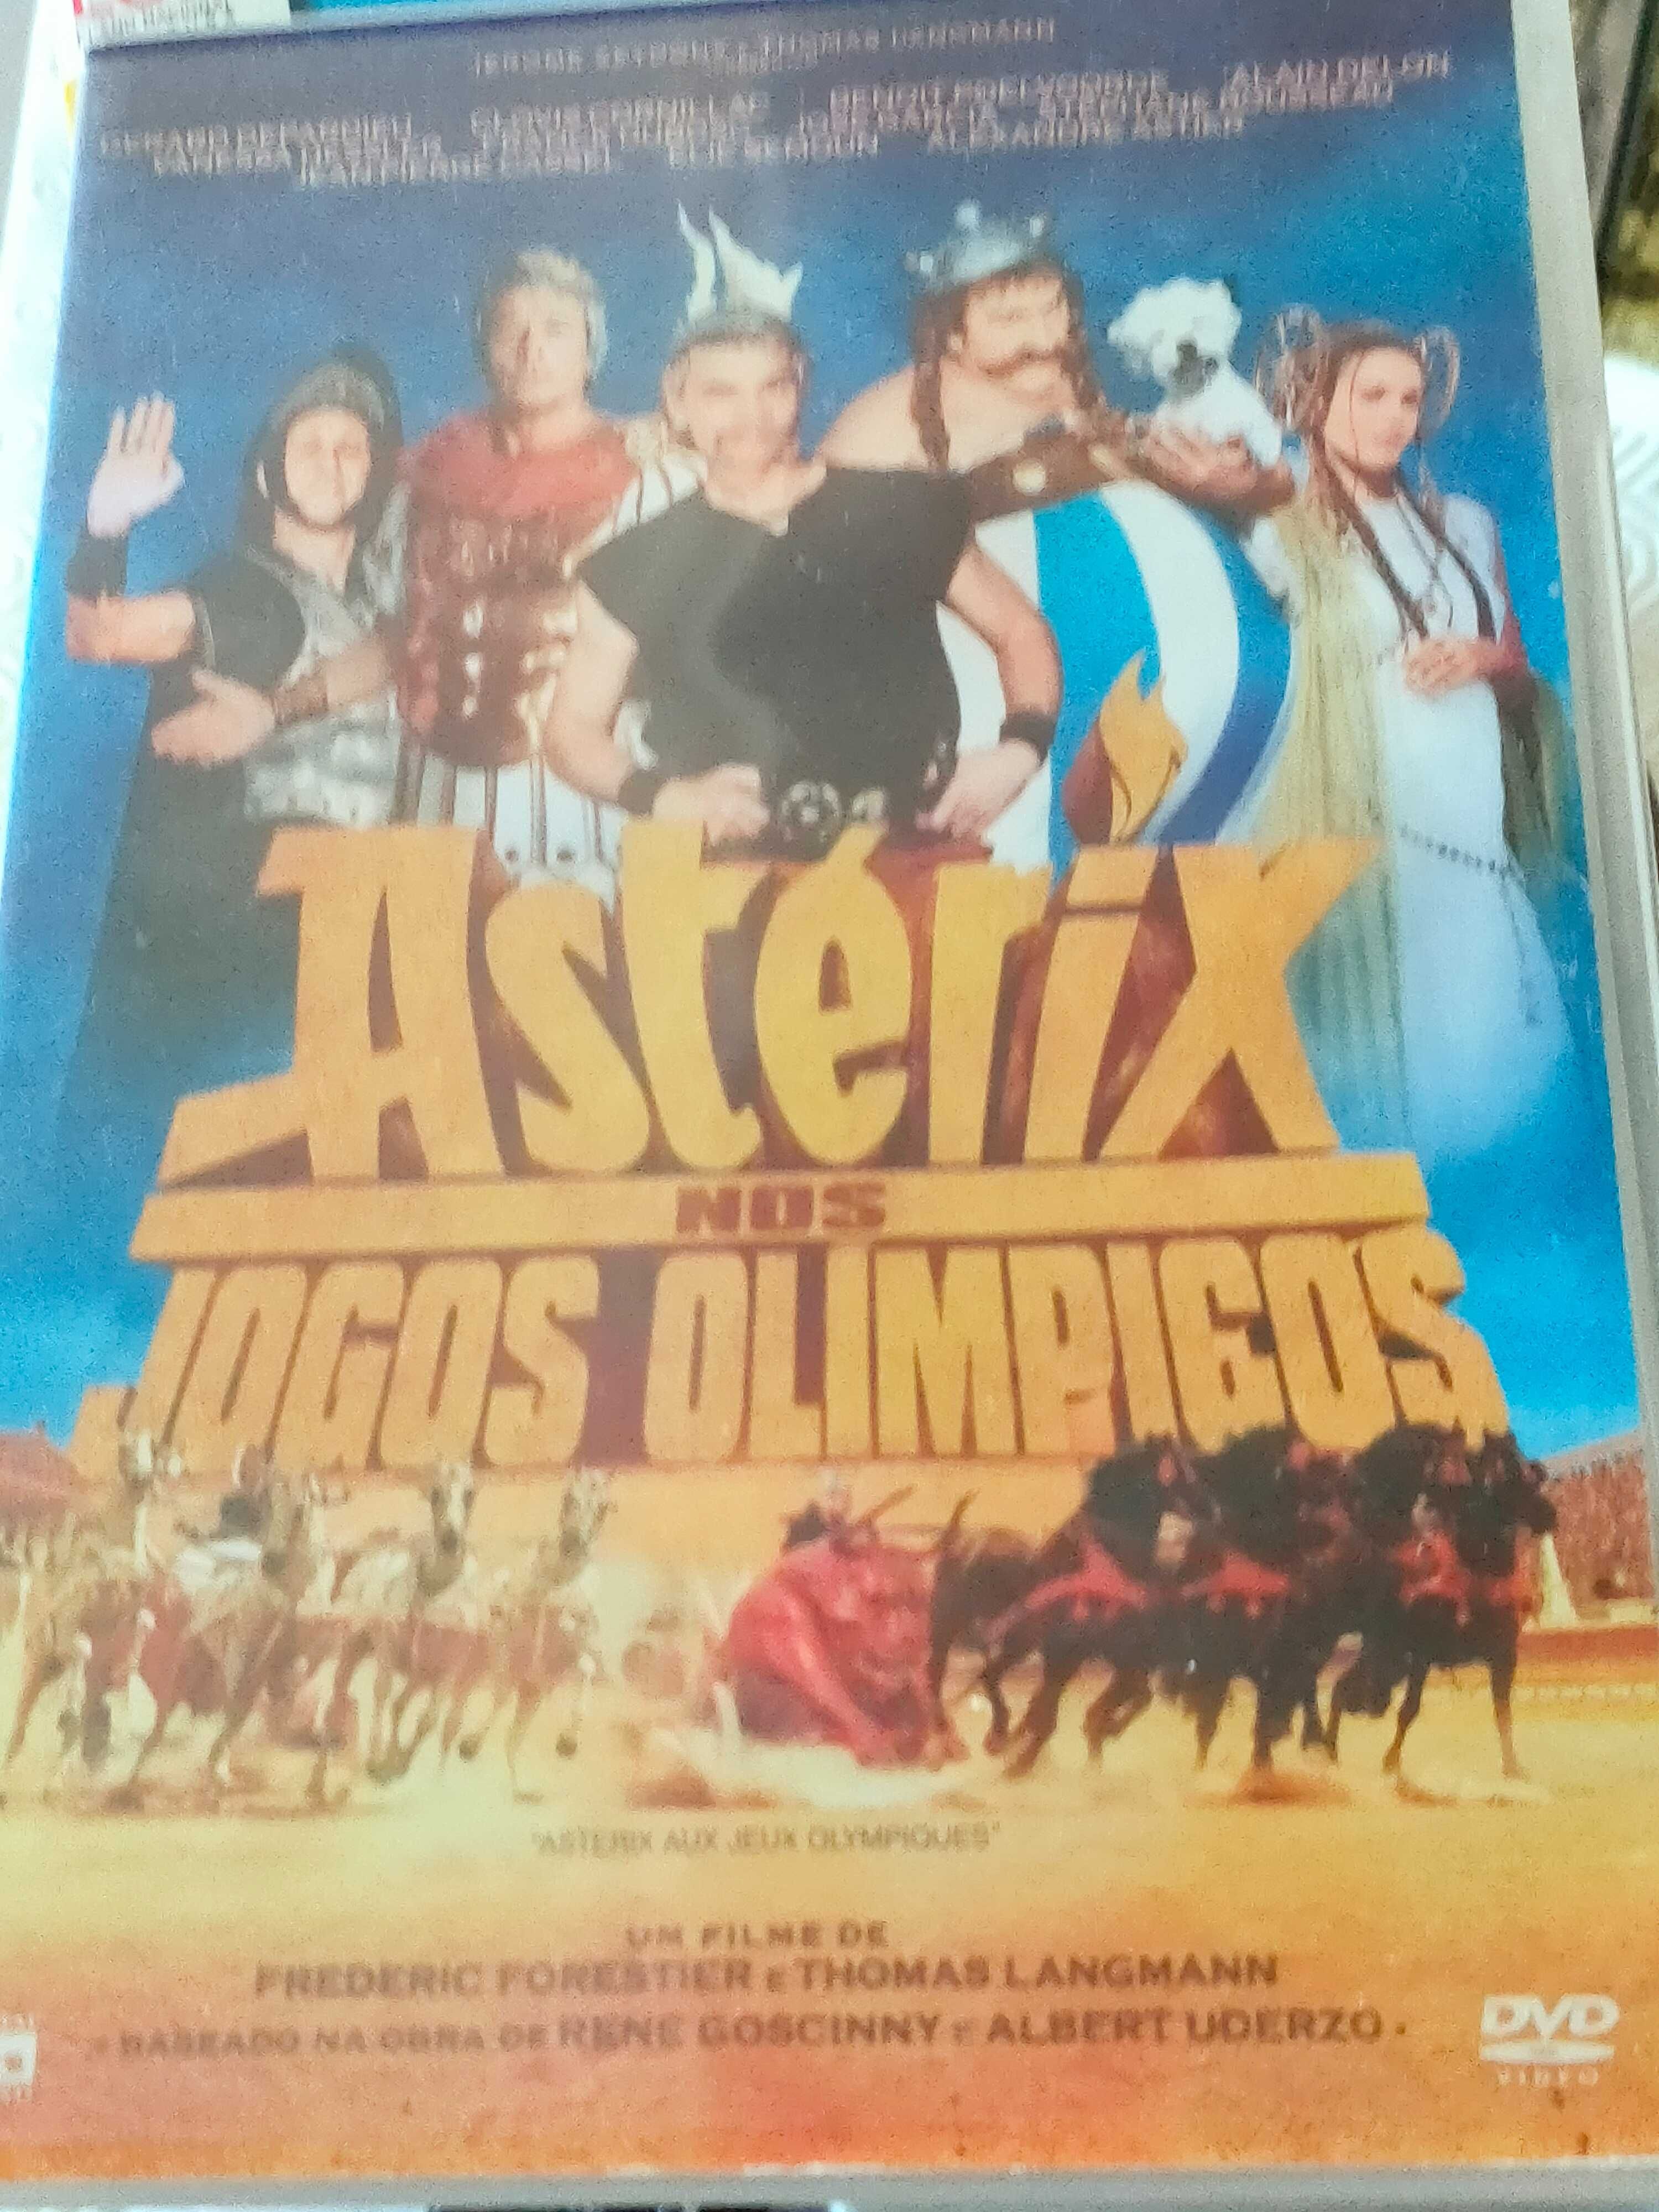 Asterix nos jogos olímpicos